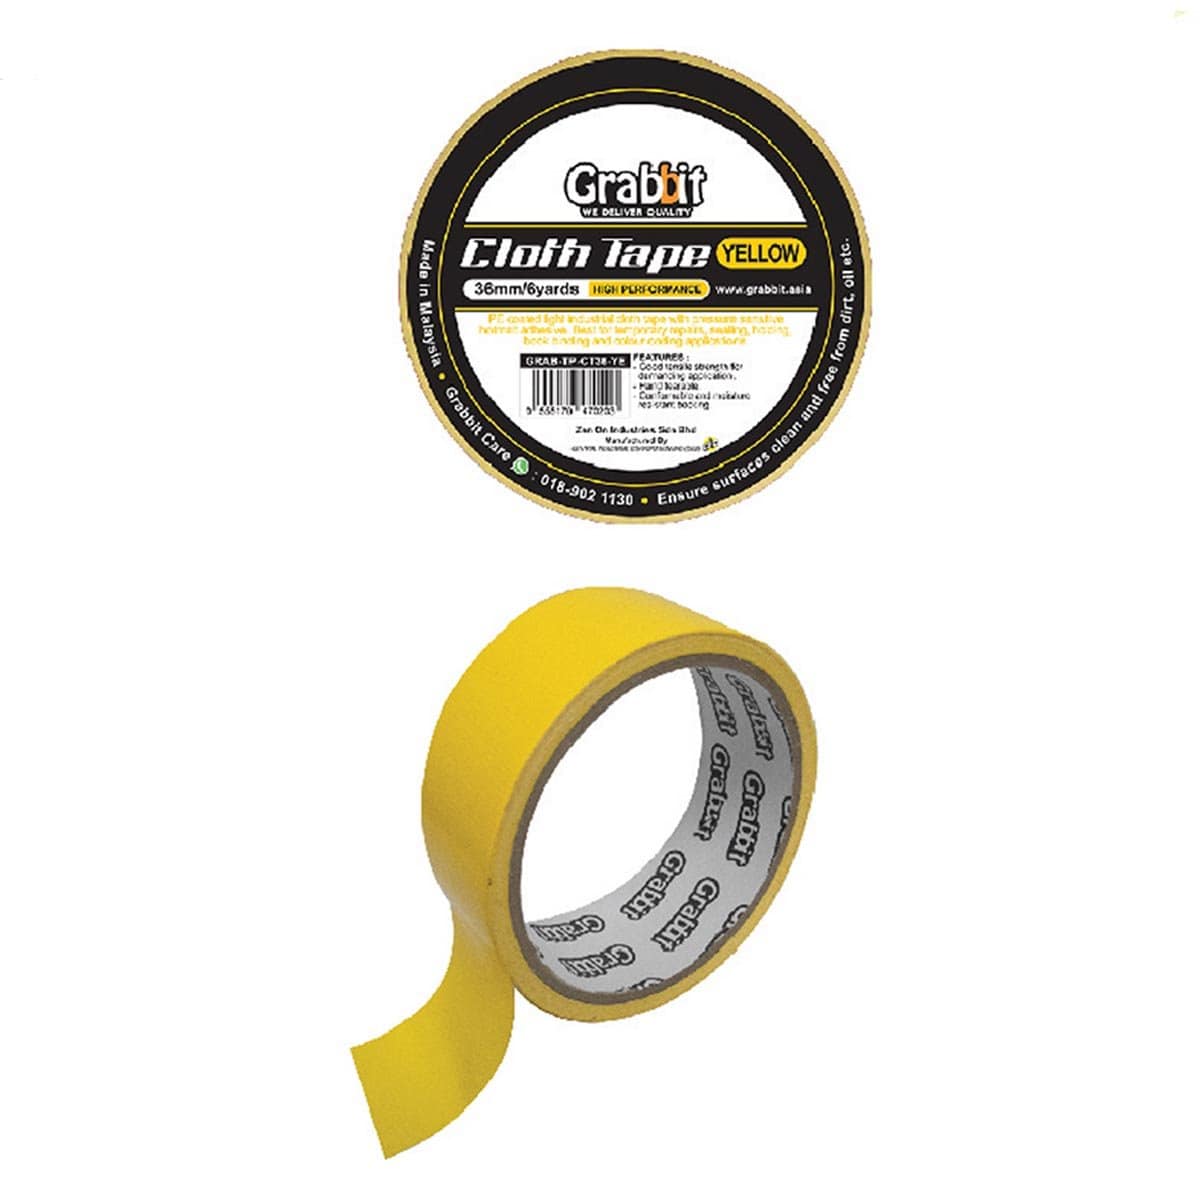 Grabbit Cloth Tape 36mm (Yellow)